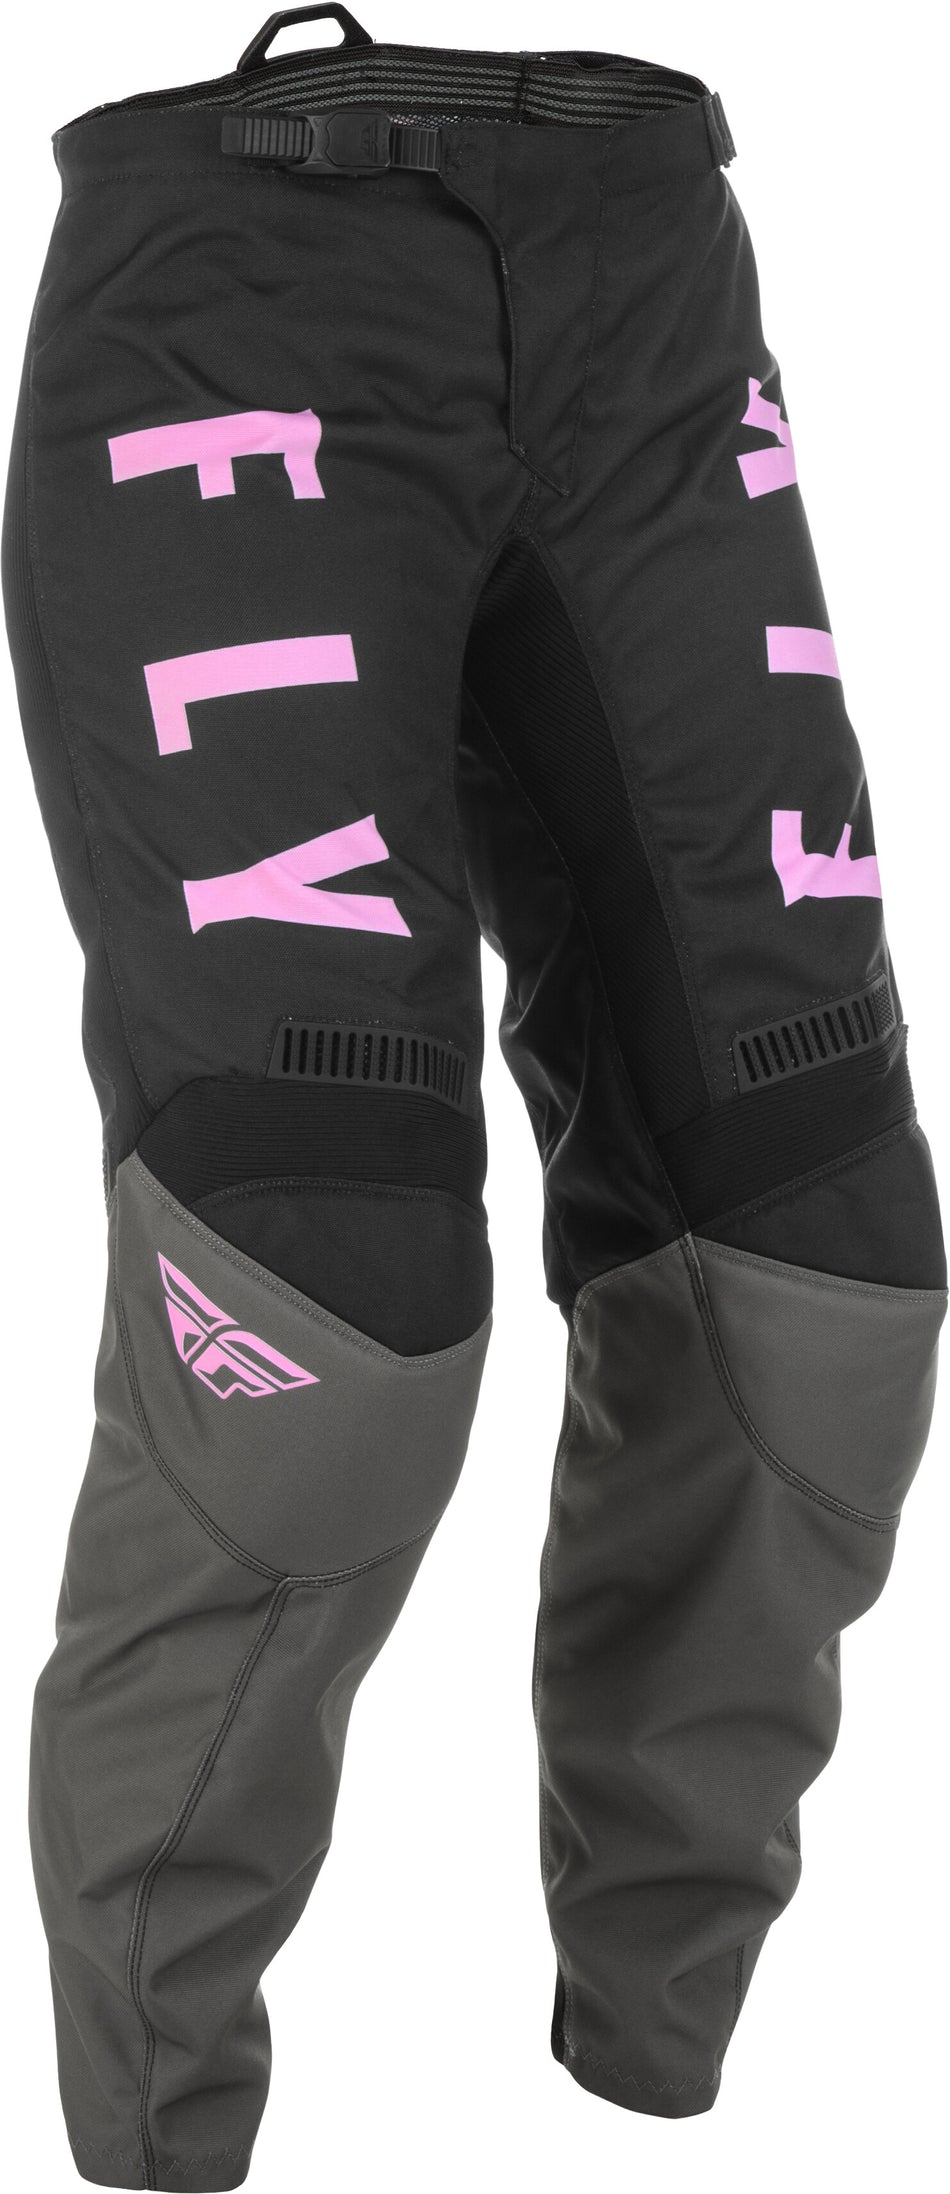 FLY RACING Women's F-16 Pants Grey/Black/Pink Sz 15/16 375-83111